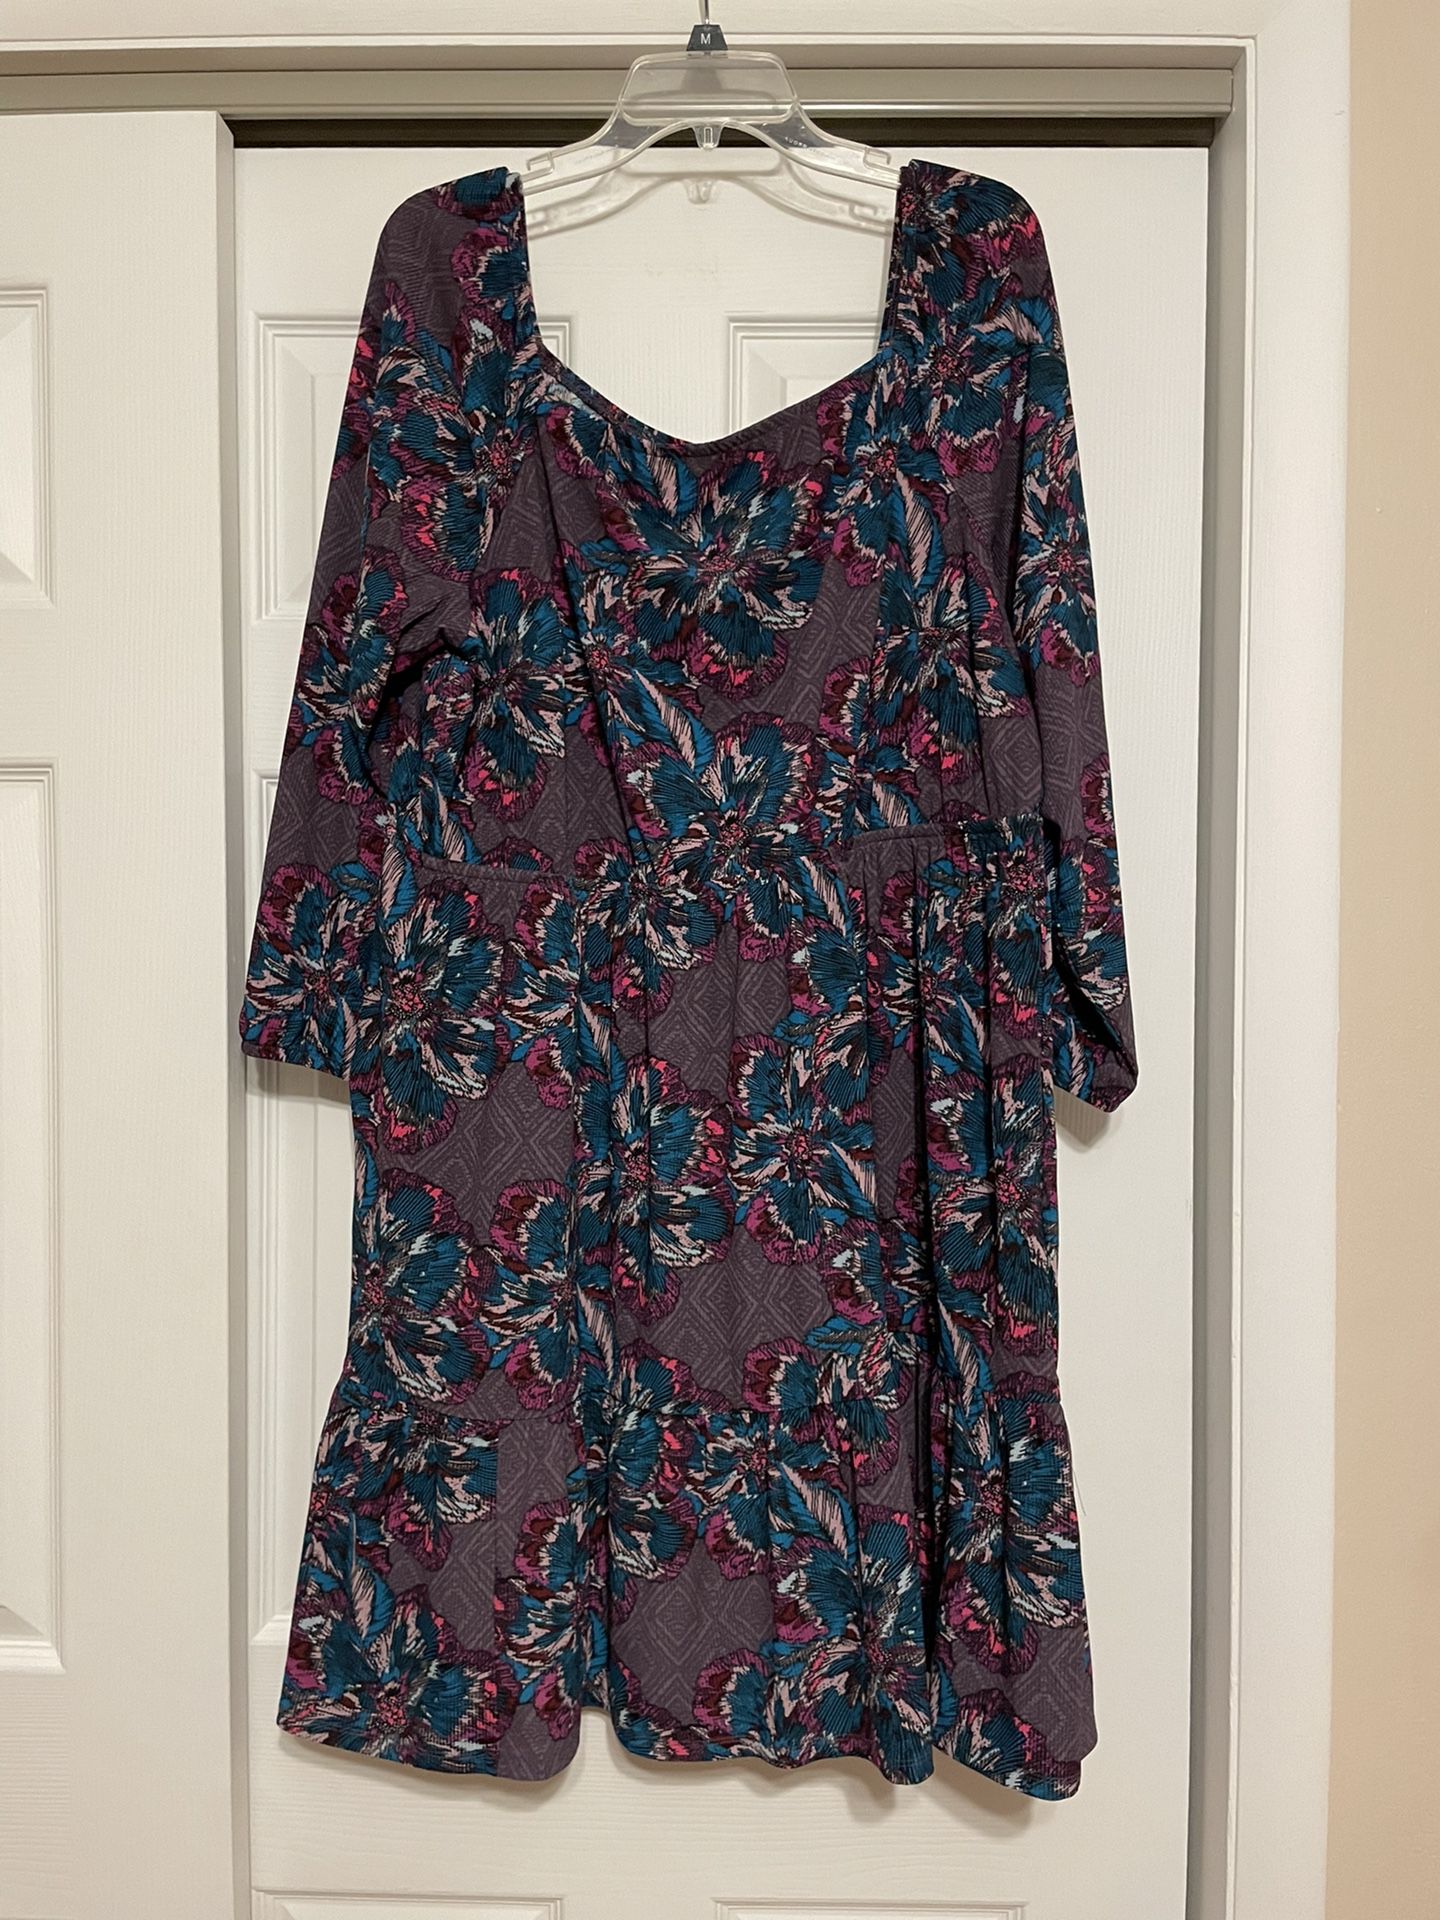 Brand New Lane Bryant Purple Floral Print Dress - Size 22/24